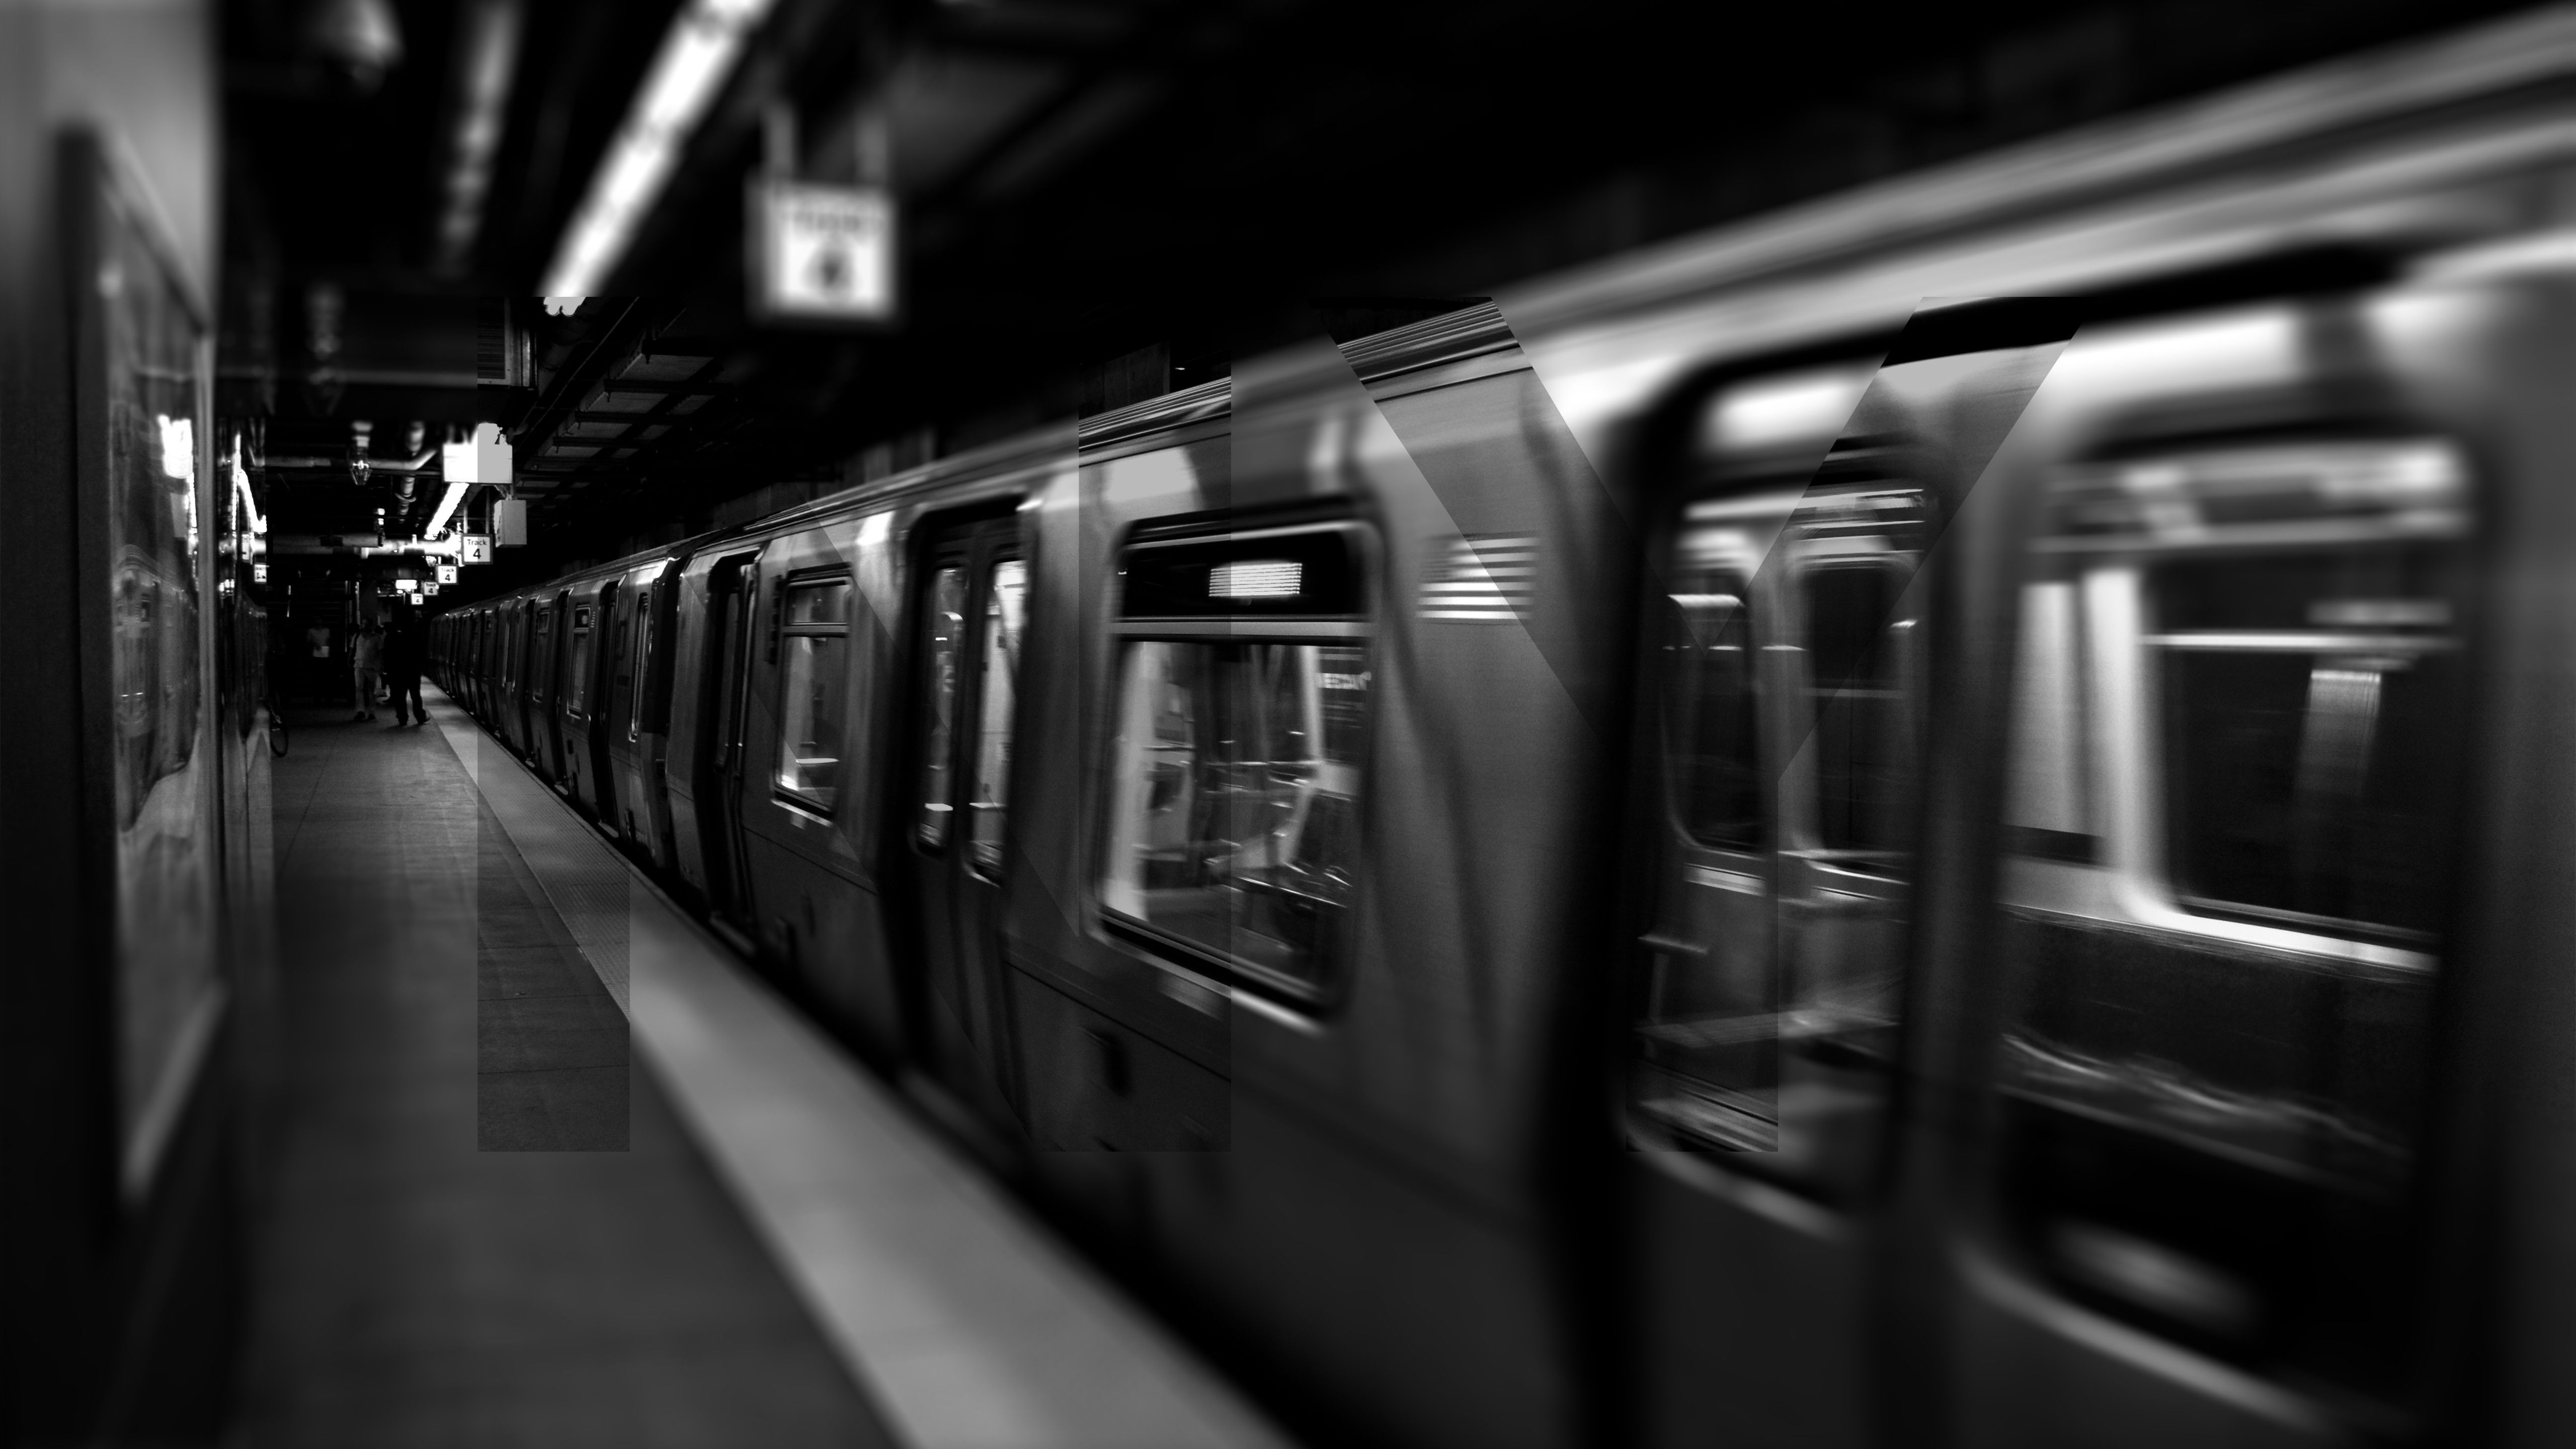 General 5120x2880 New York City underground subway metro train monochrome vehicle. Train wallpaper, Wallpaper, Grayscale